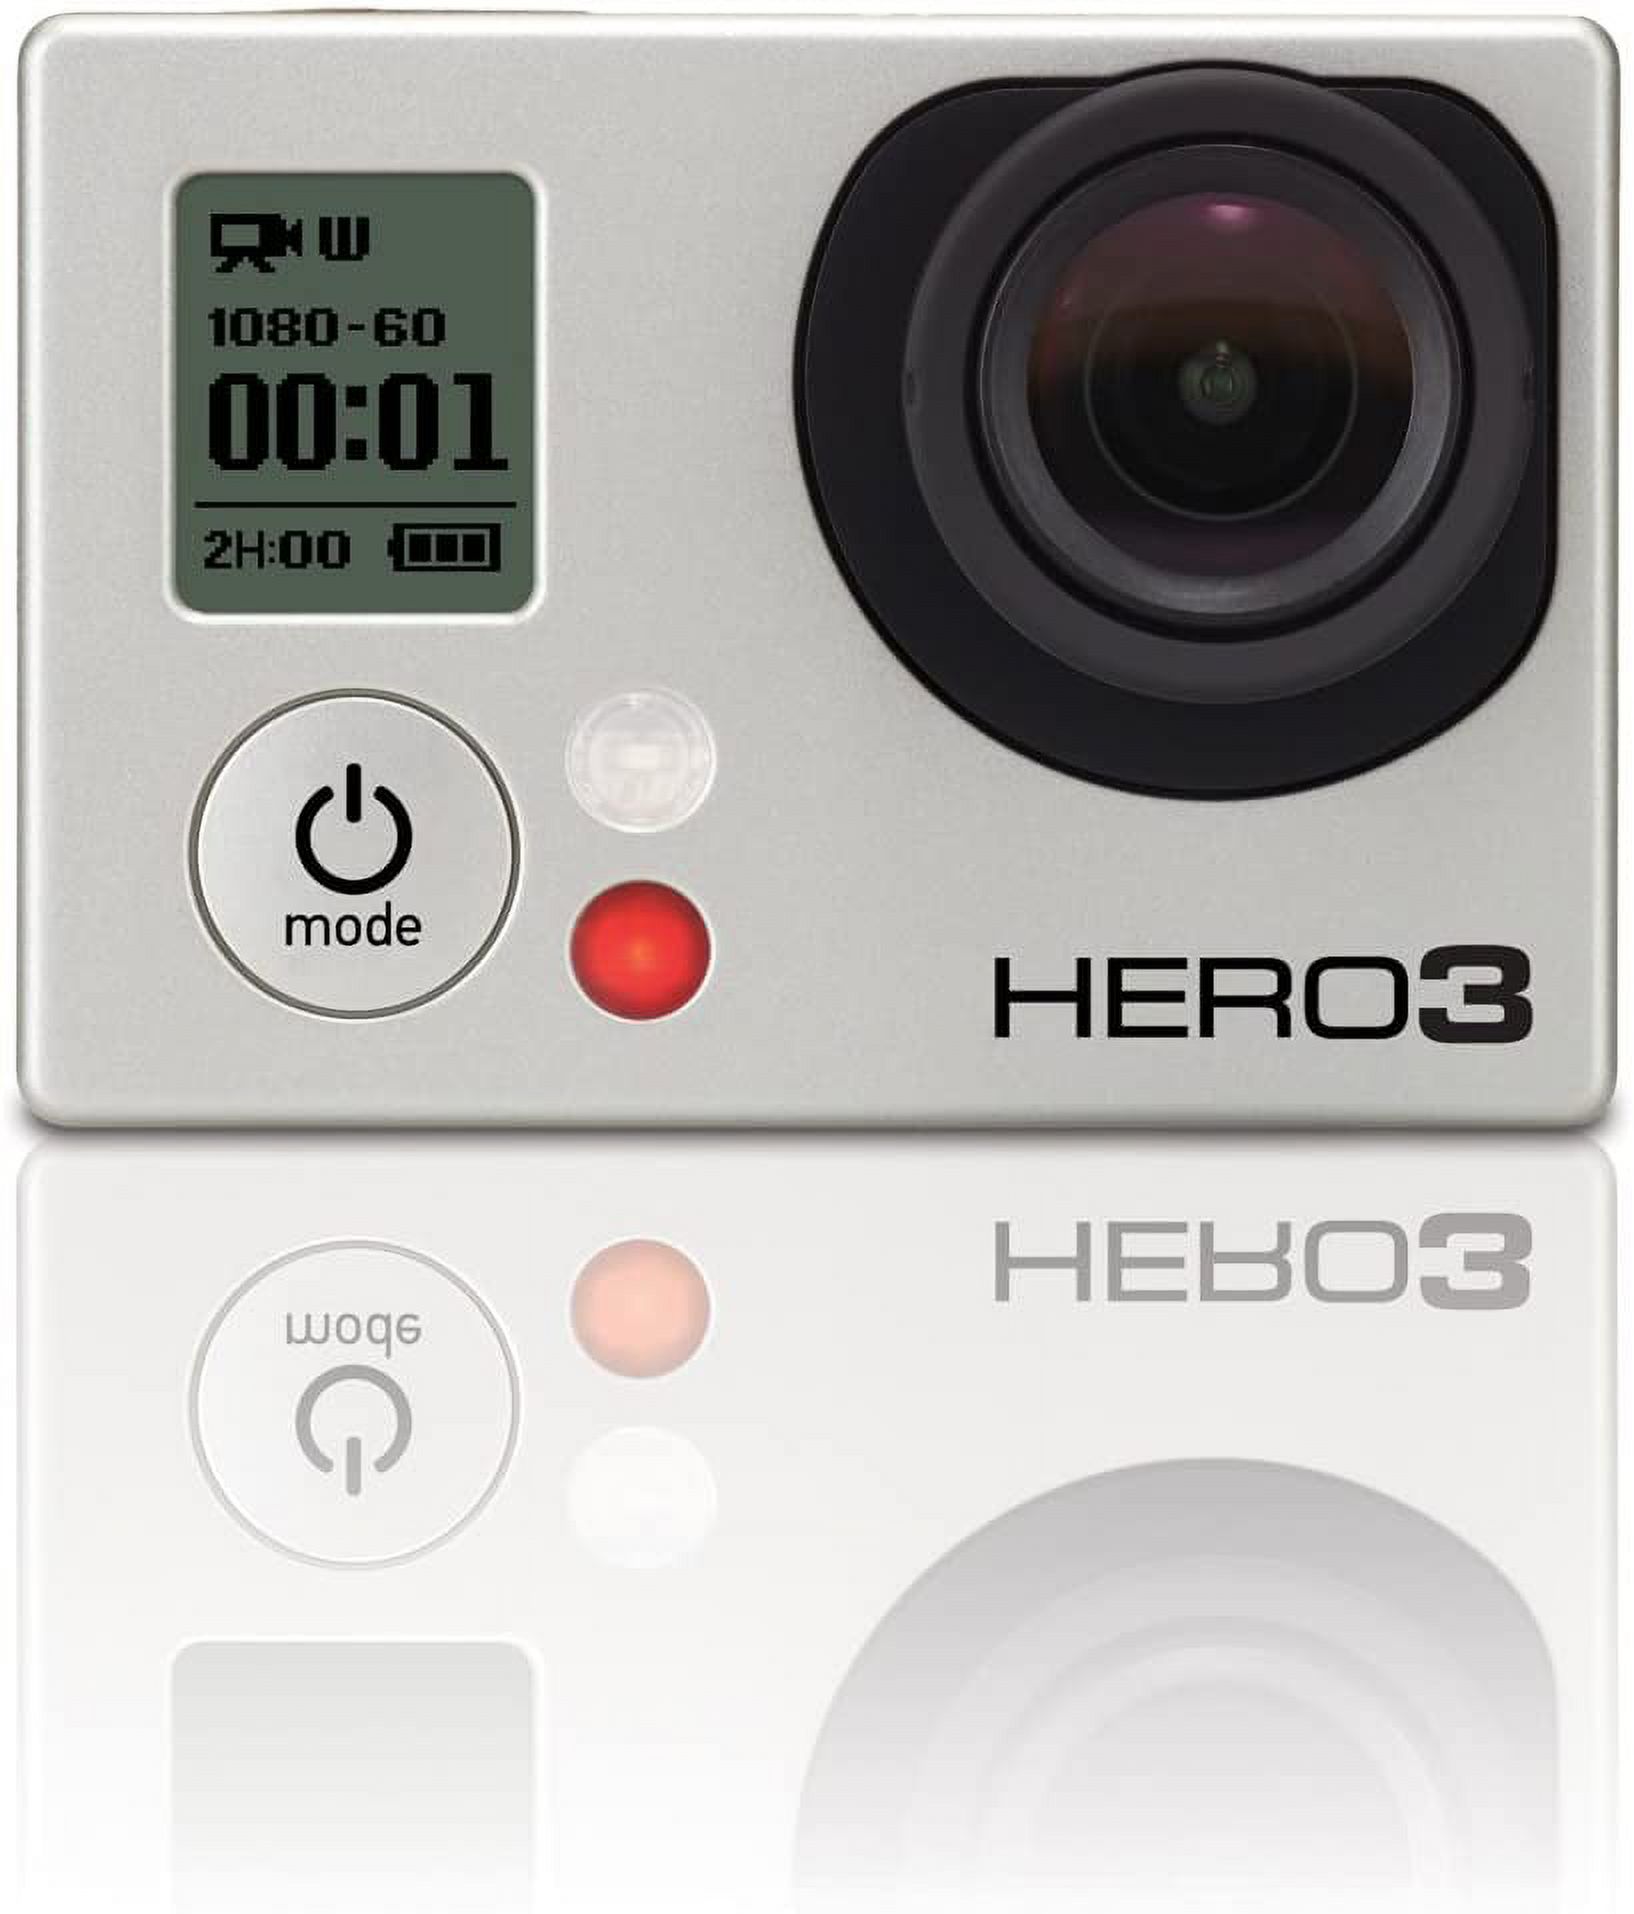 GoPro Hero3 Black Edition HERO3 CHDHX-301 + 35-in-1 GoPro Action Camera Accessories Kit - image 2 of 8